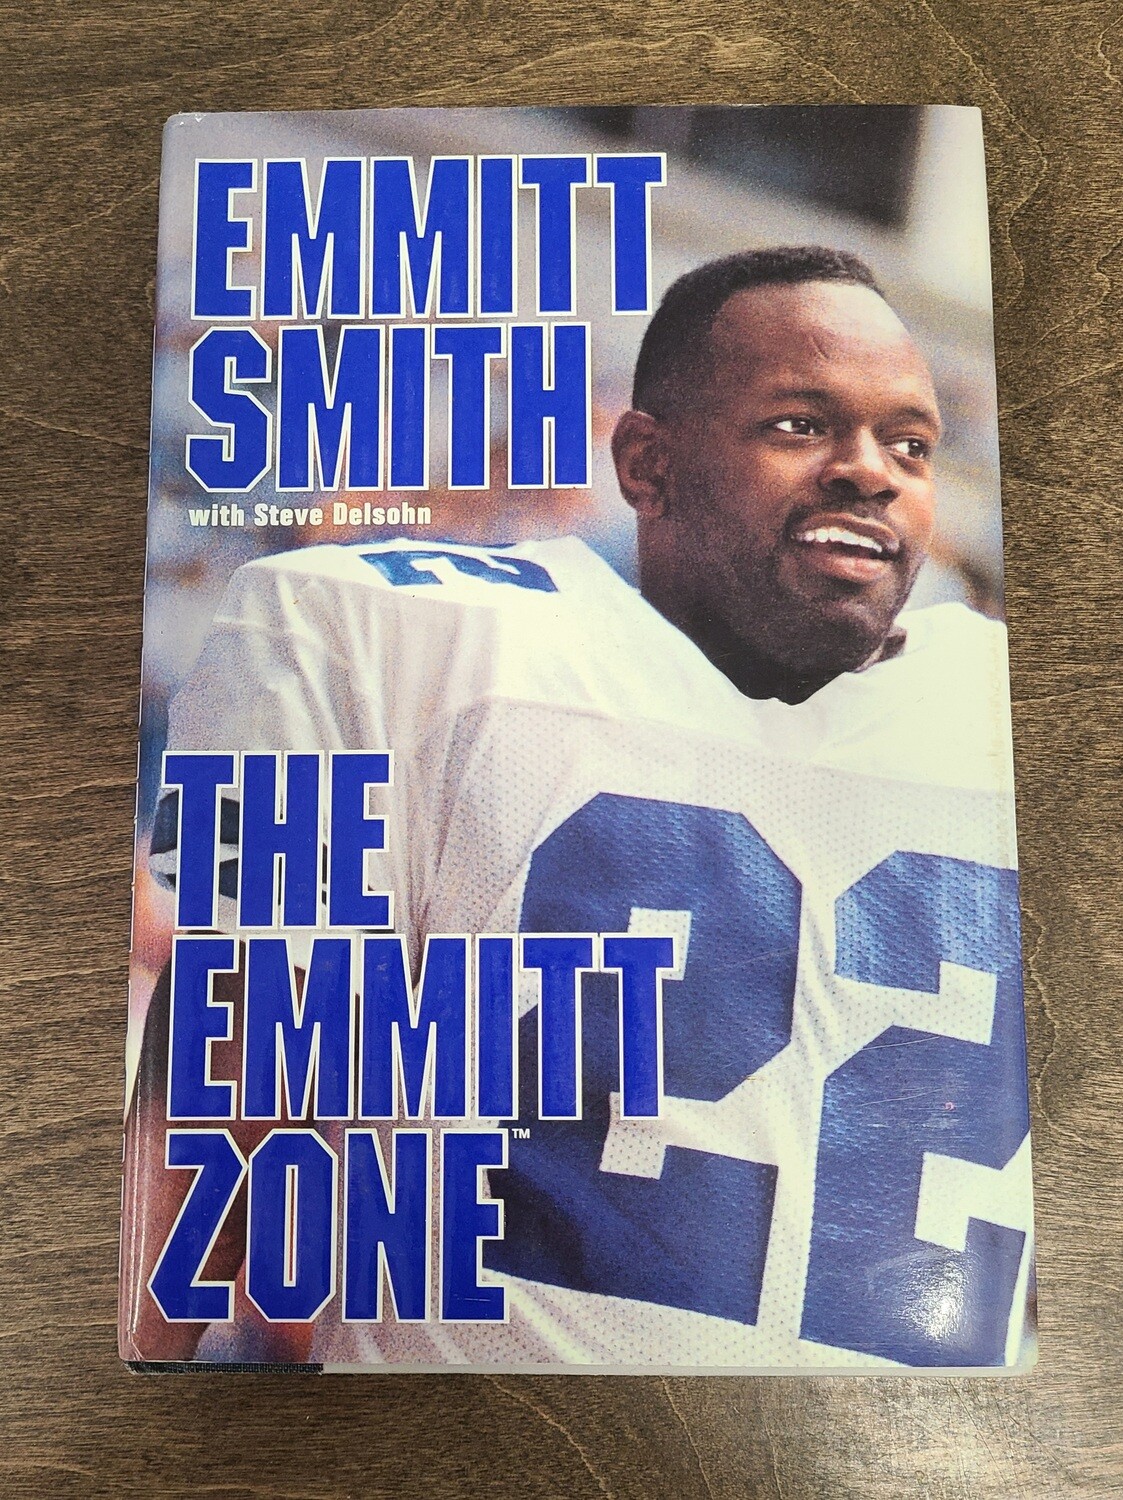 The Emmitt Zone by Emmitt Smith with Steve Delsohn